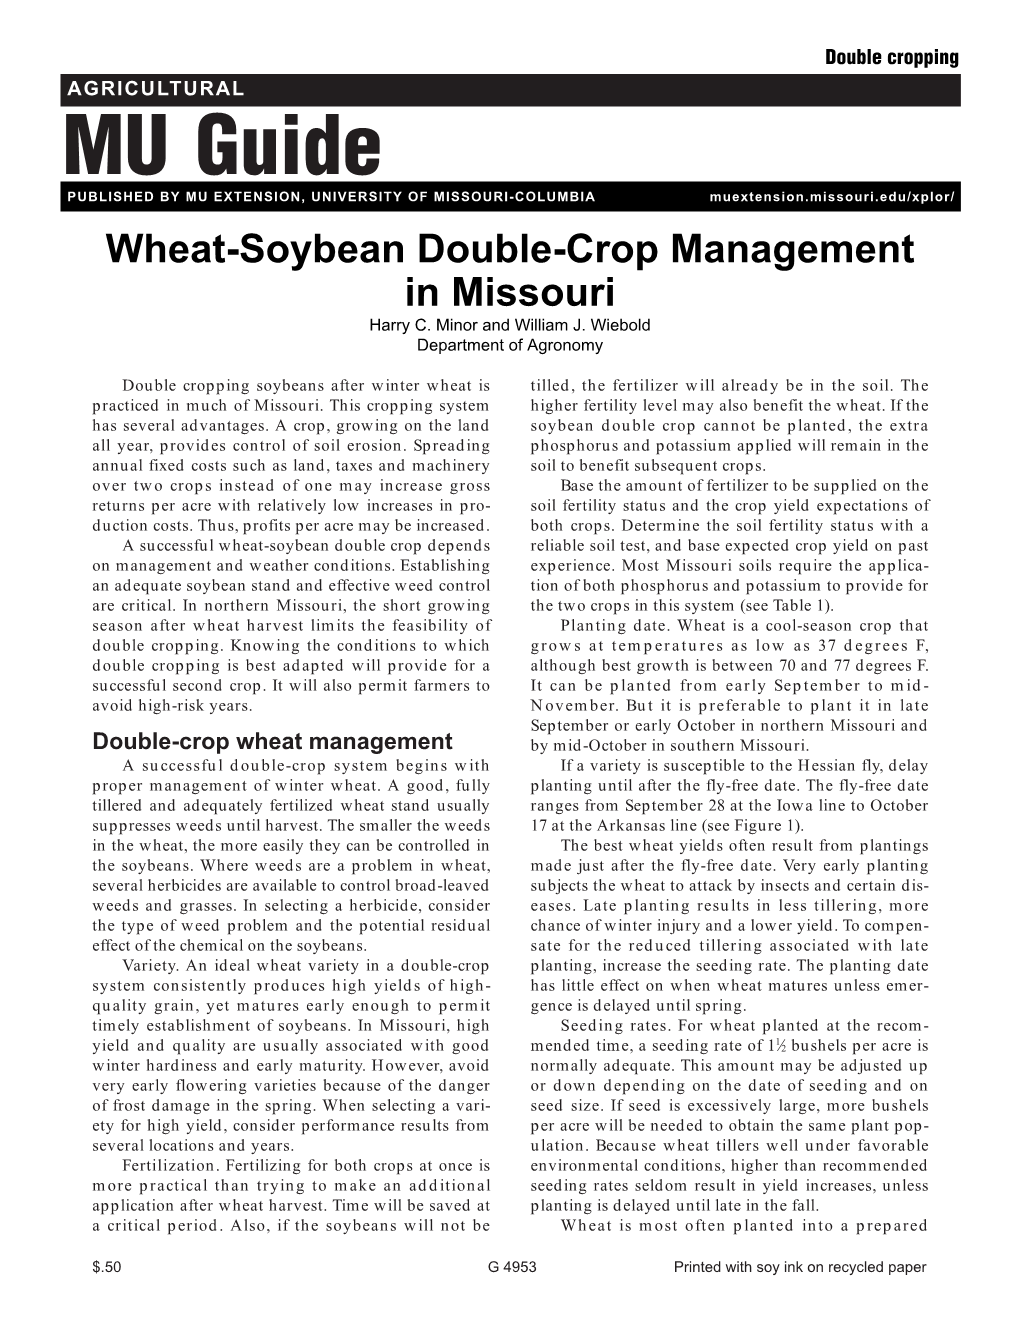 Wheat-Soybean Double-Crop Management in Missouri Harry C